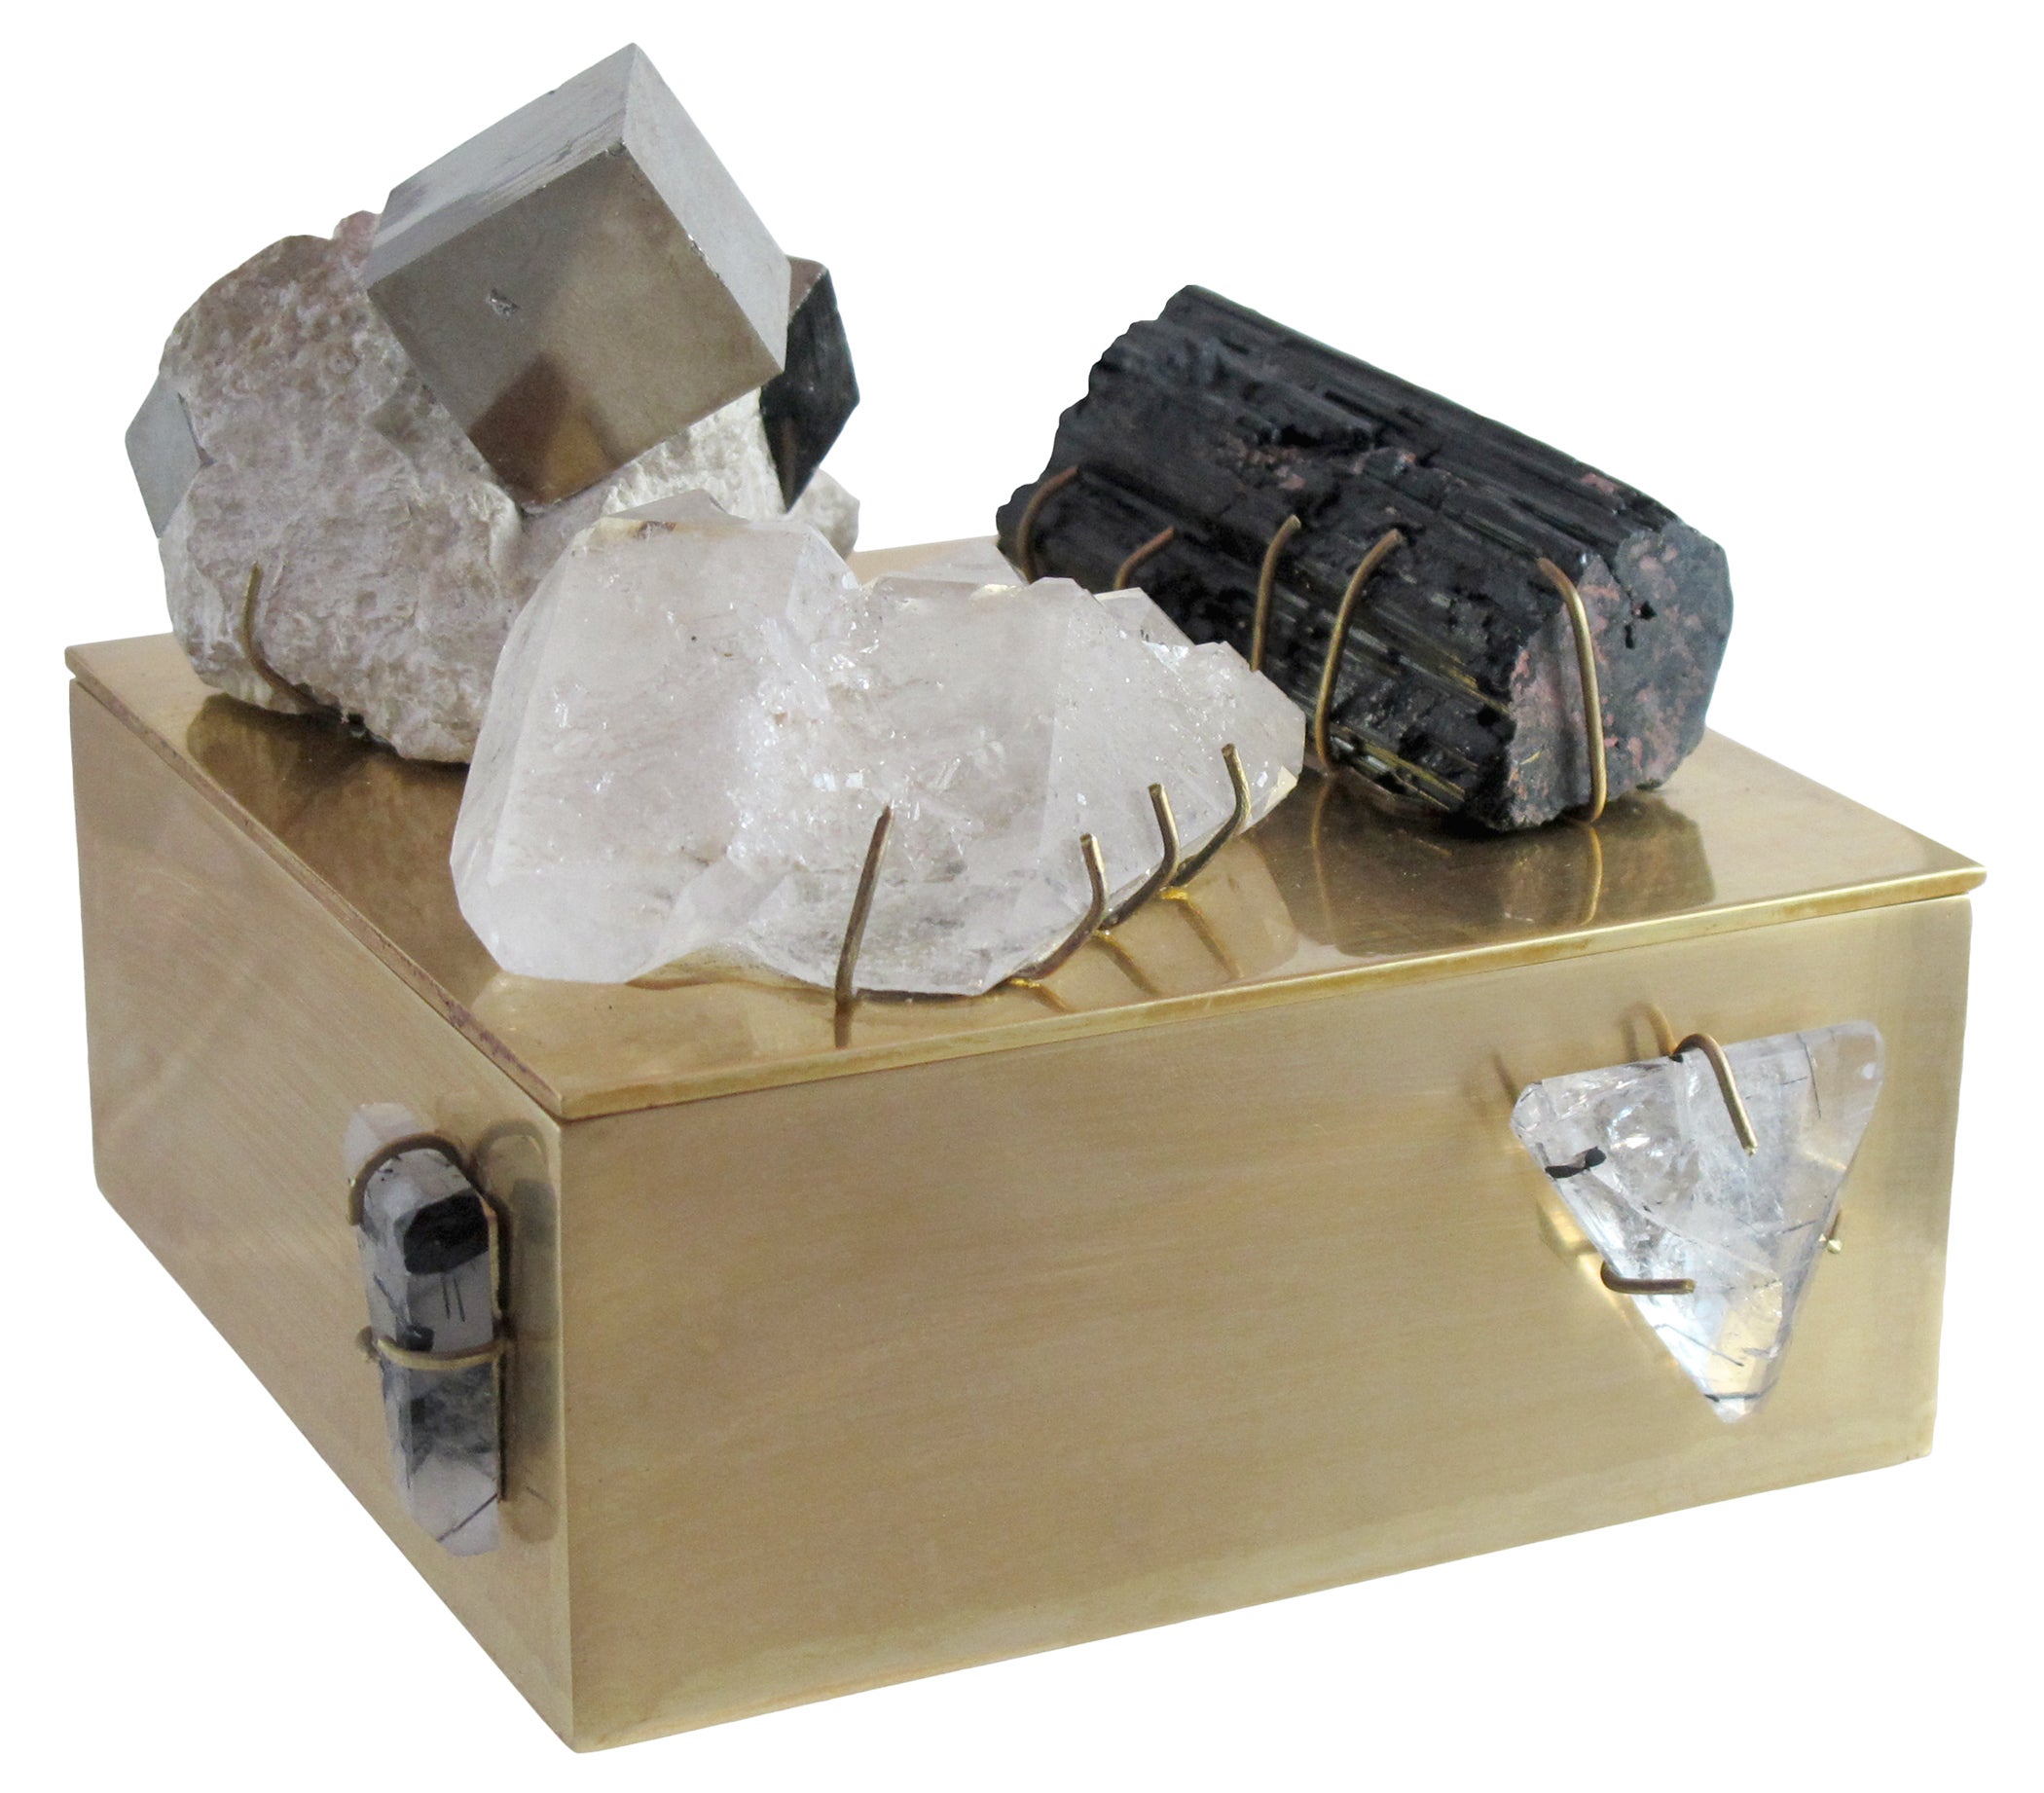 Pyrite Matrix Bauble Box by Kelly Wearstler